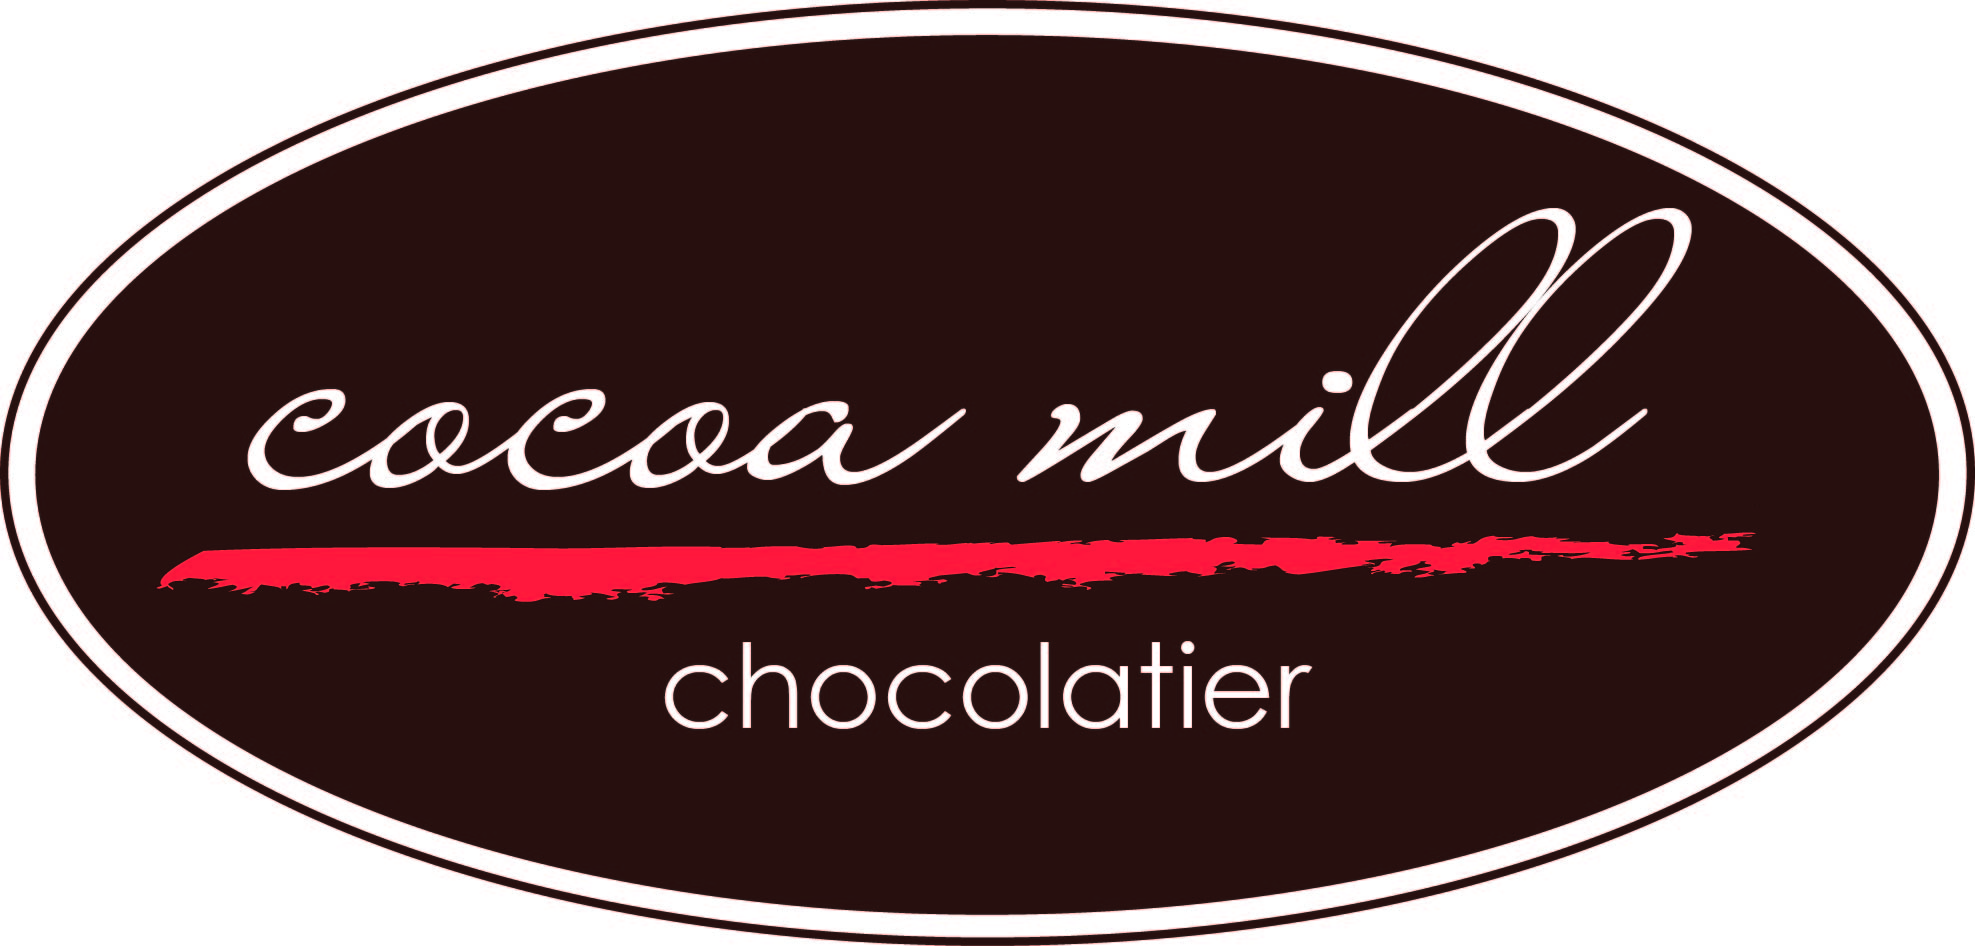 Cocoa Mill Chocolate Company